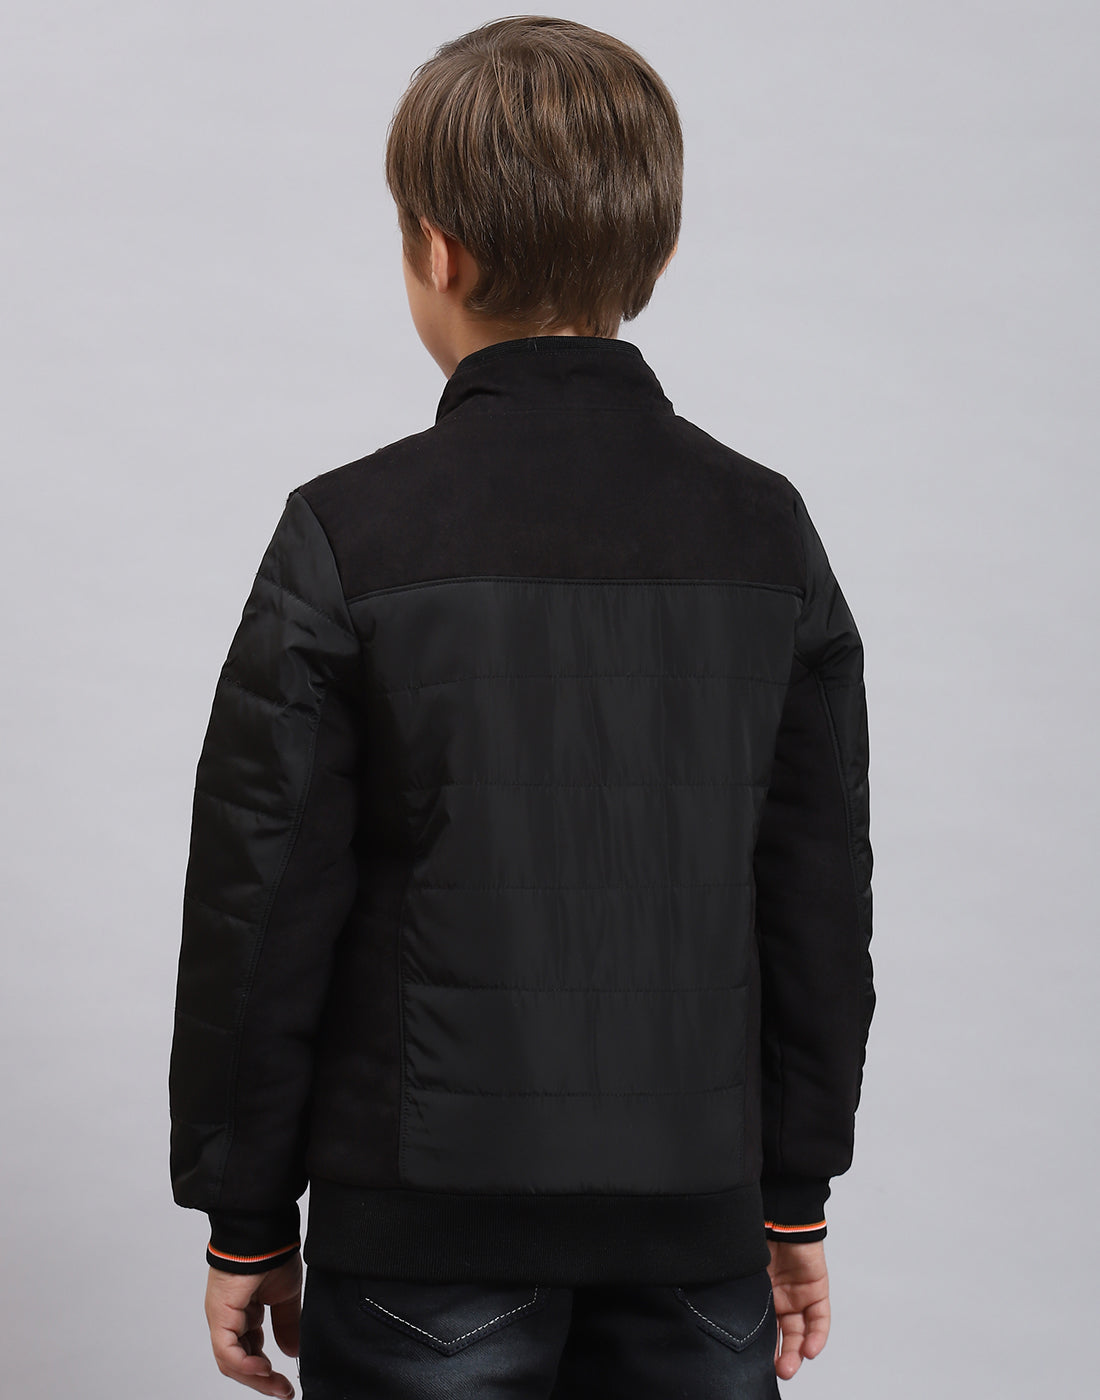 Boys Black Solid Stand Collar Full Sleeve Boys Jacket